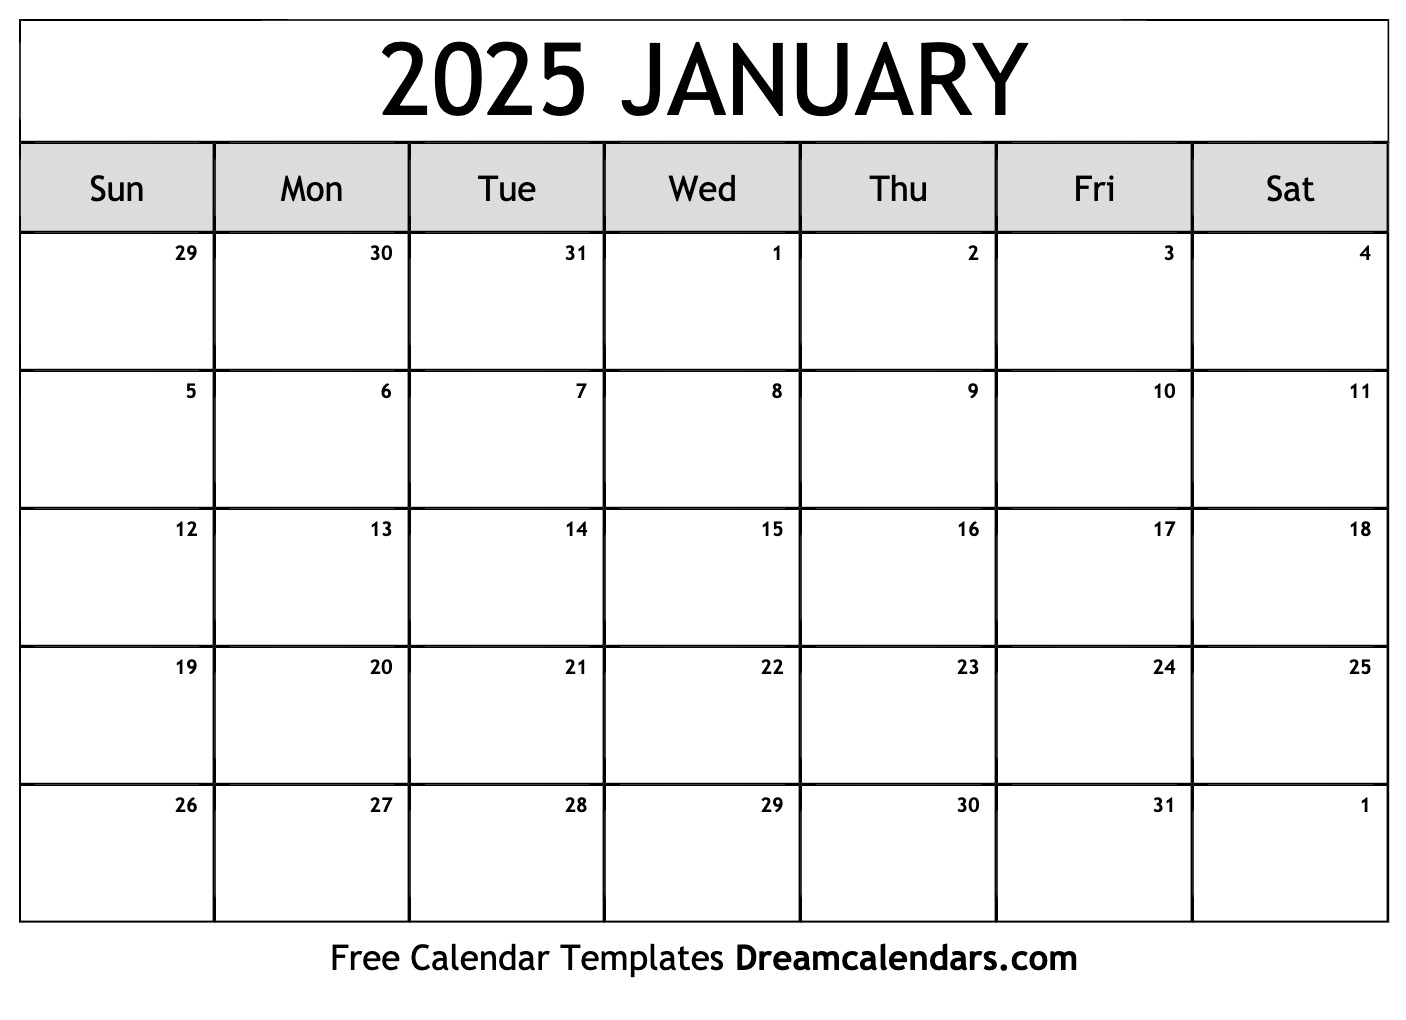 Jan 2025 Calendar Pdf - Darya Celestina